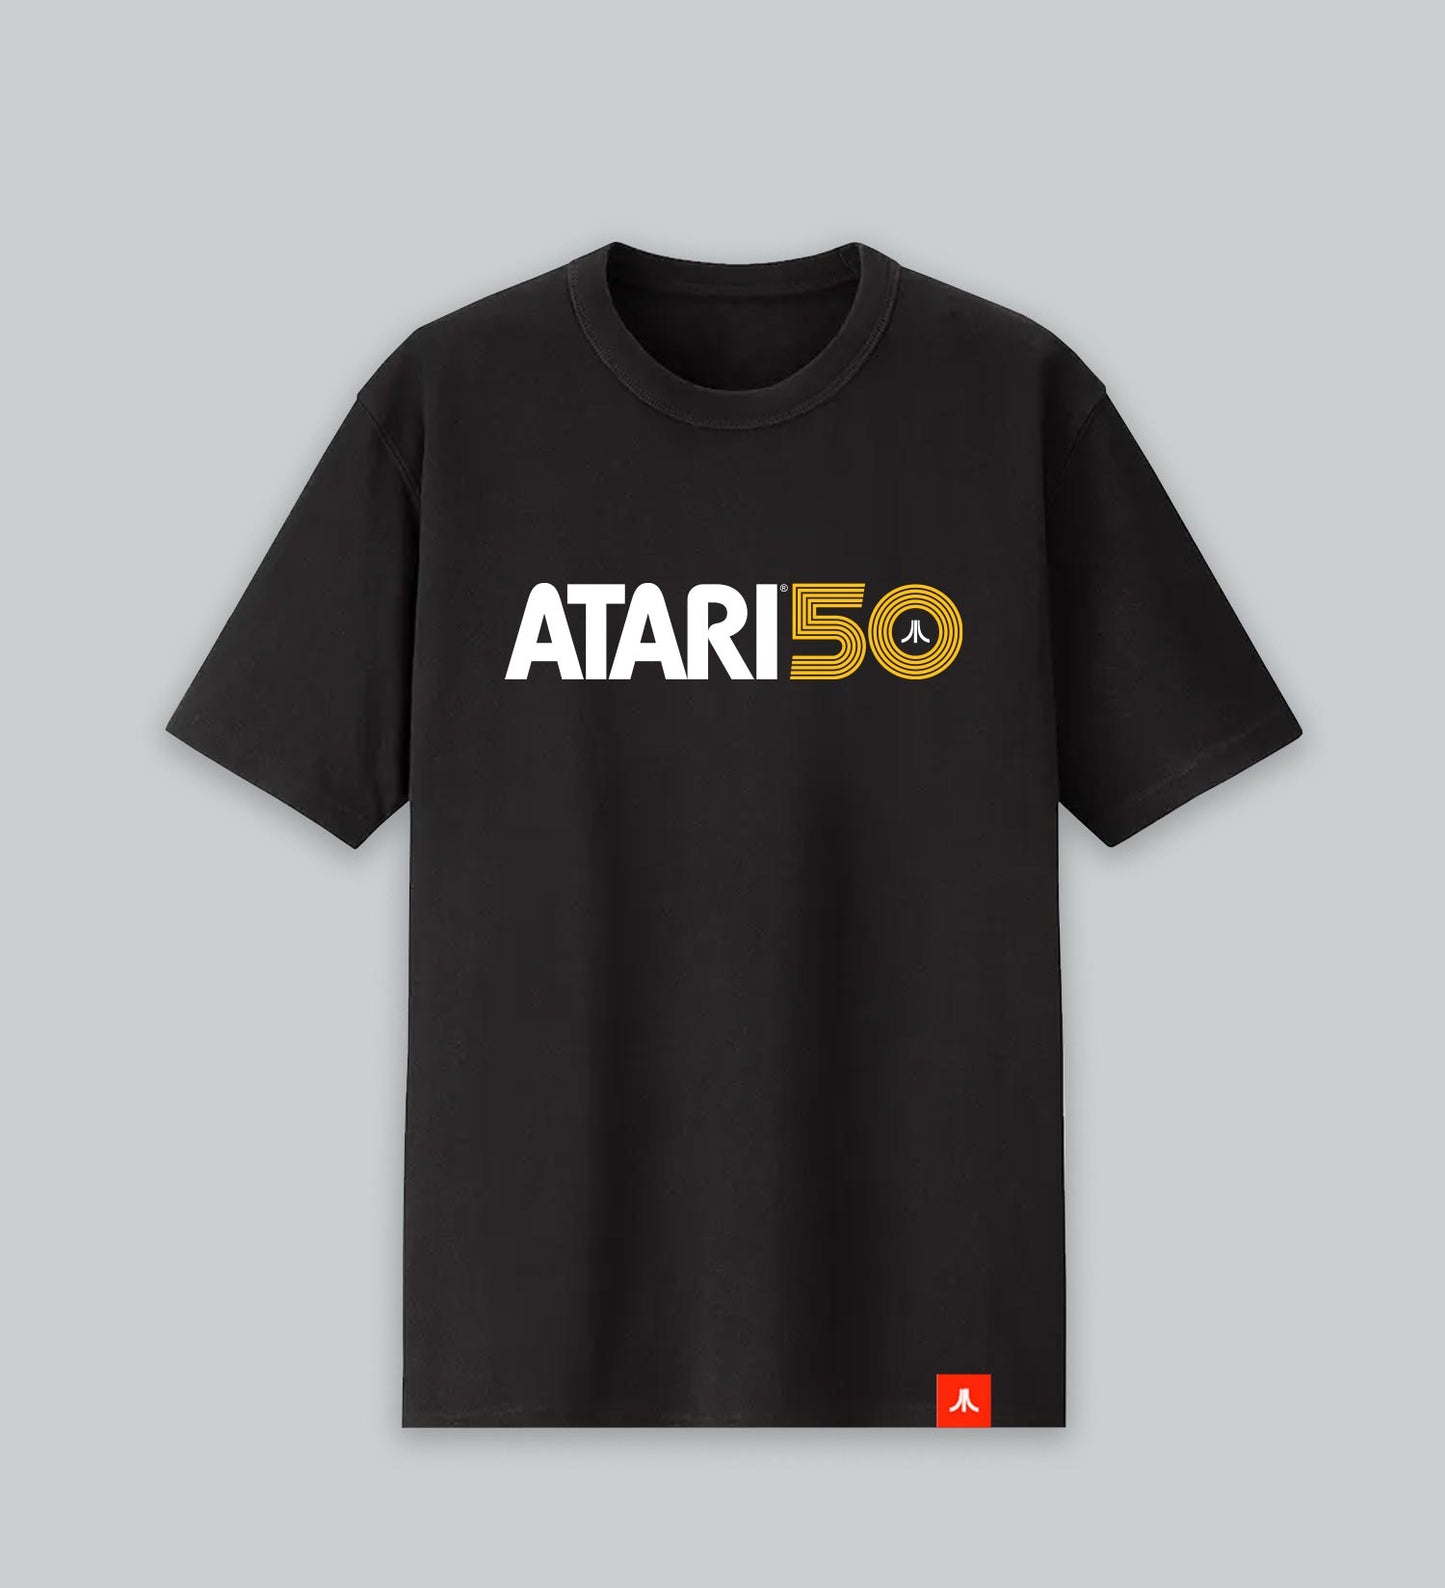 Atari 50th Anniversary Sunnyvale Logo Tee